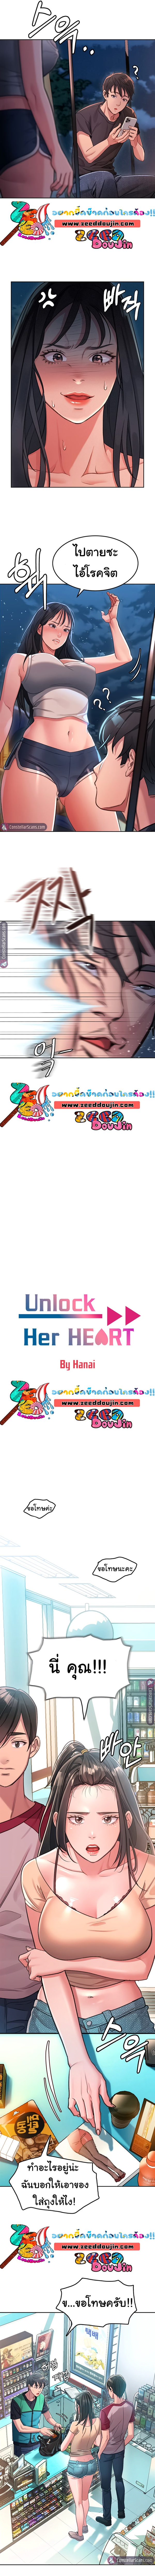 Unlock Her Heart